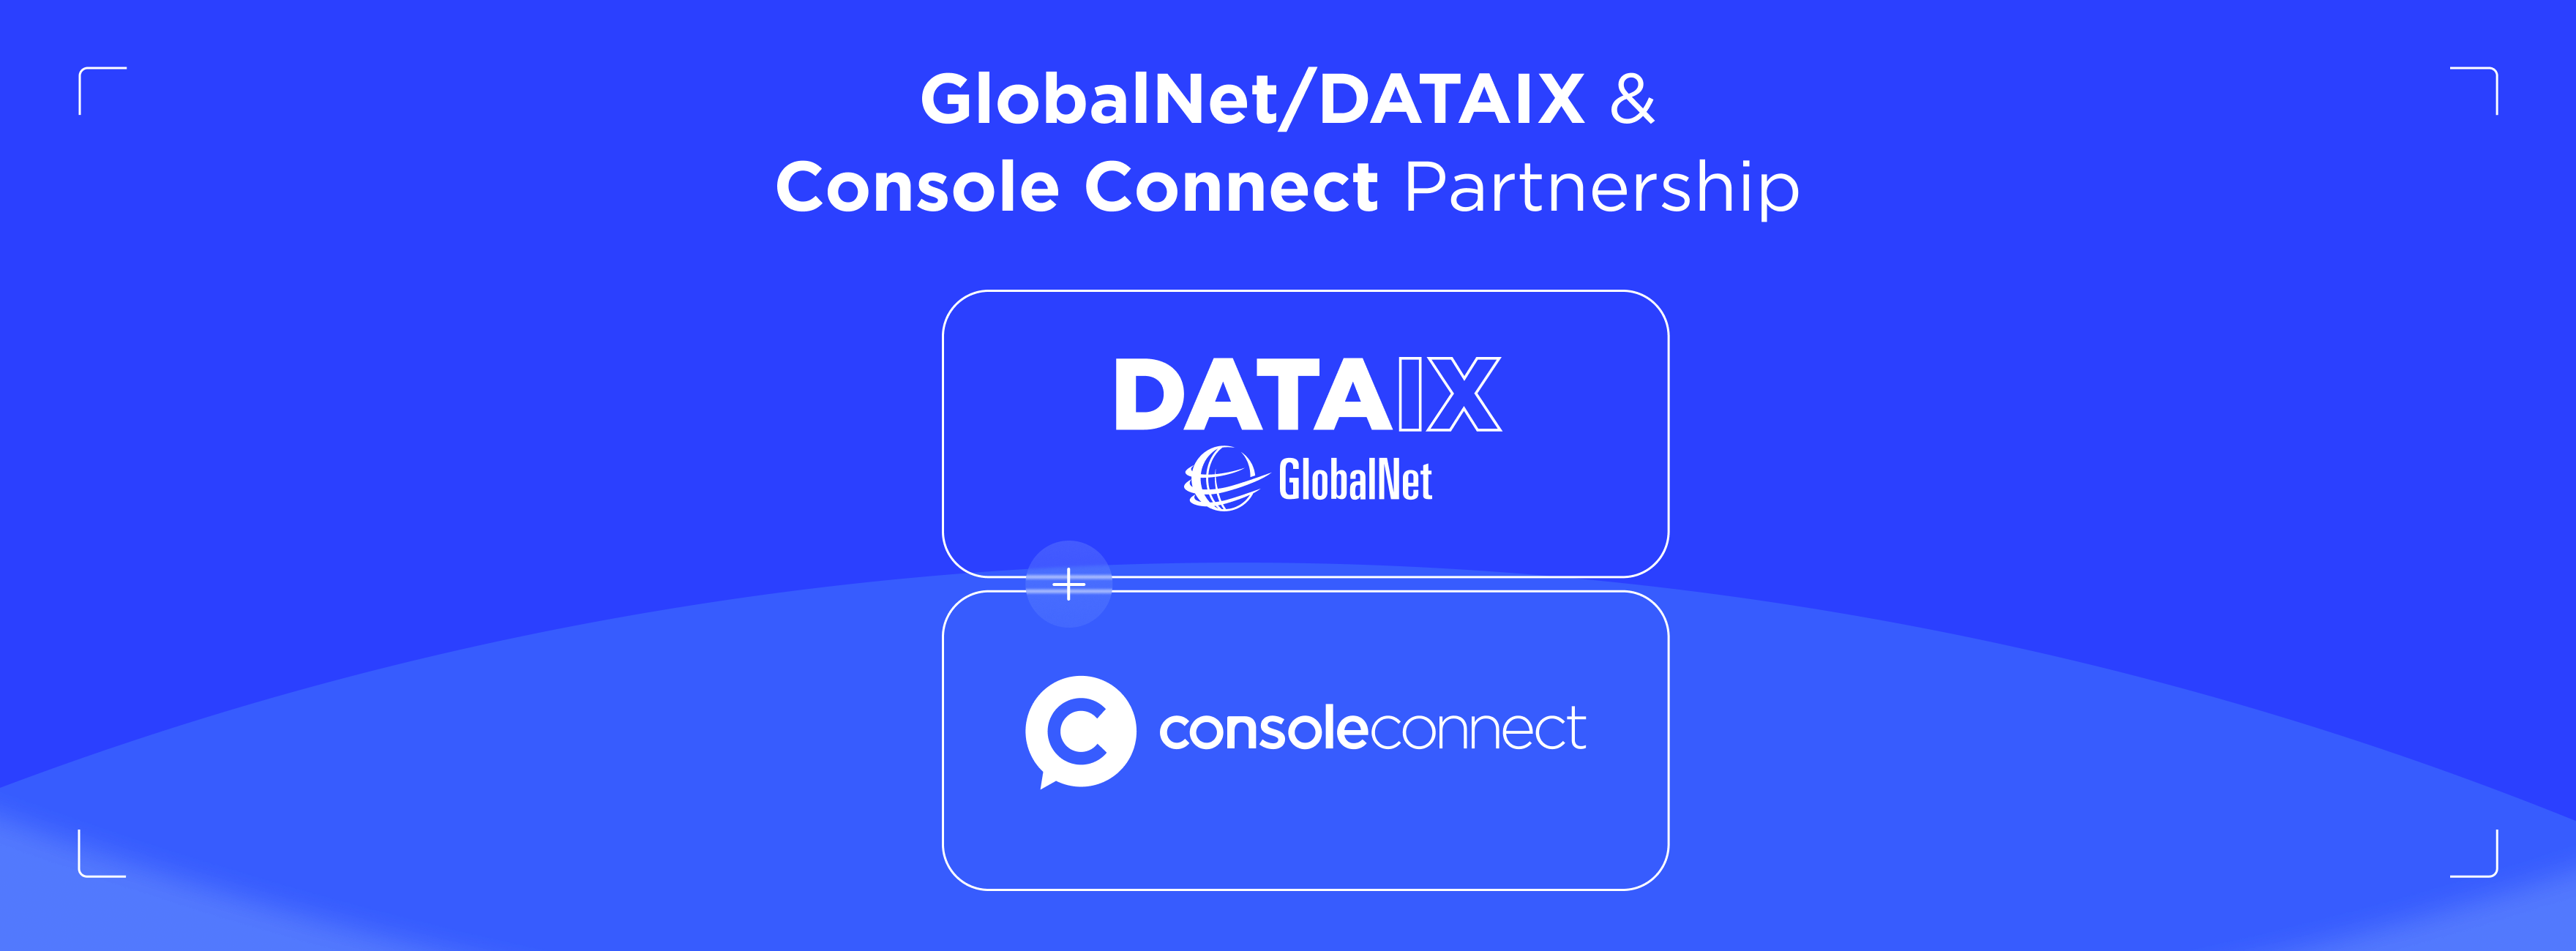 GlobalNet/DATAIX & Console Connect Partnership